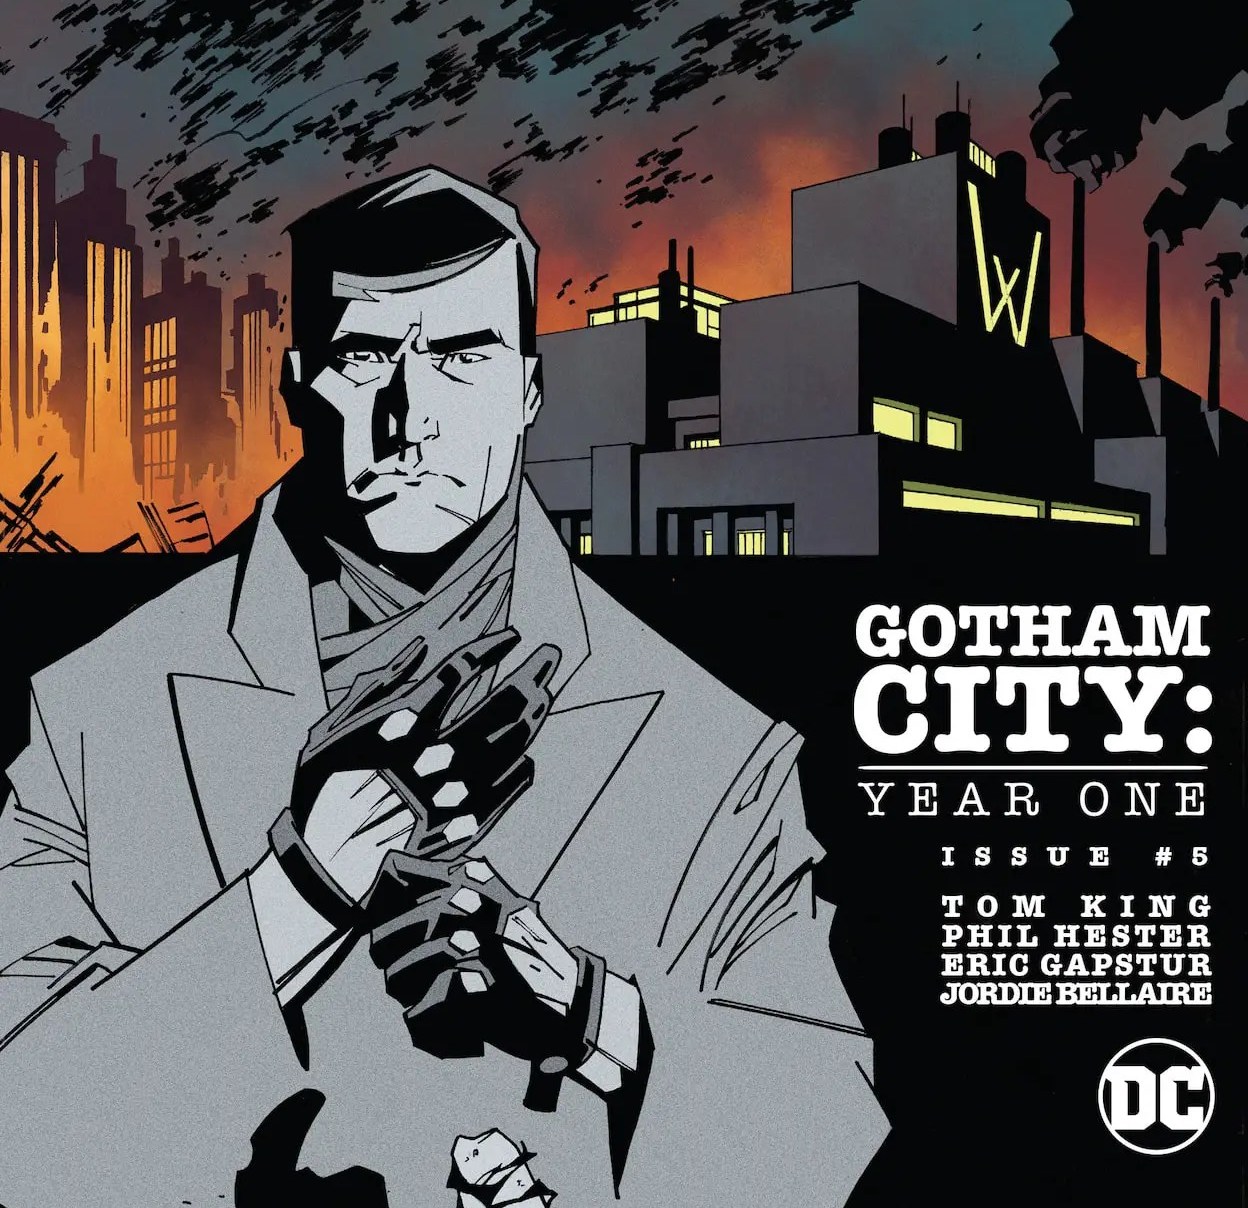 'Gotham City: Year One' #5 sets Gotham on fire